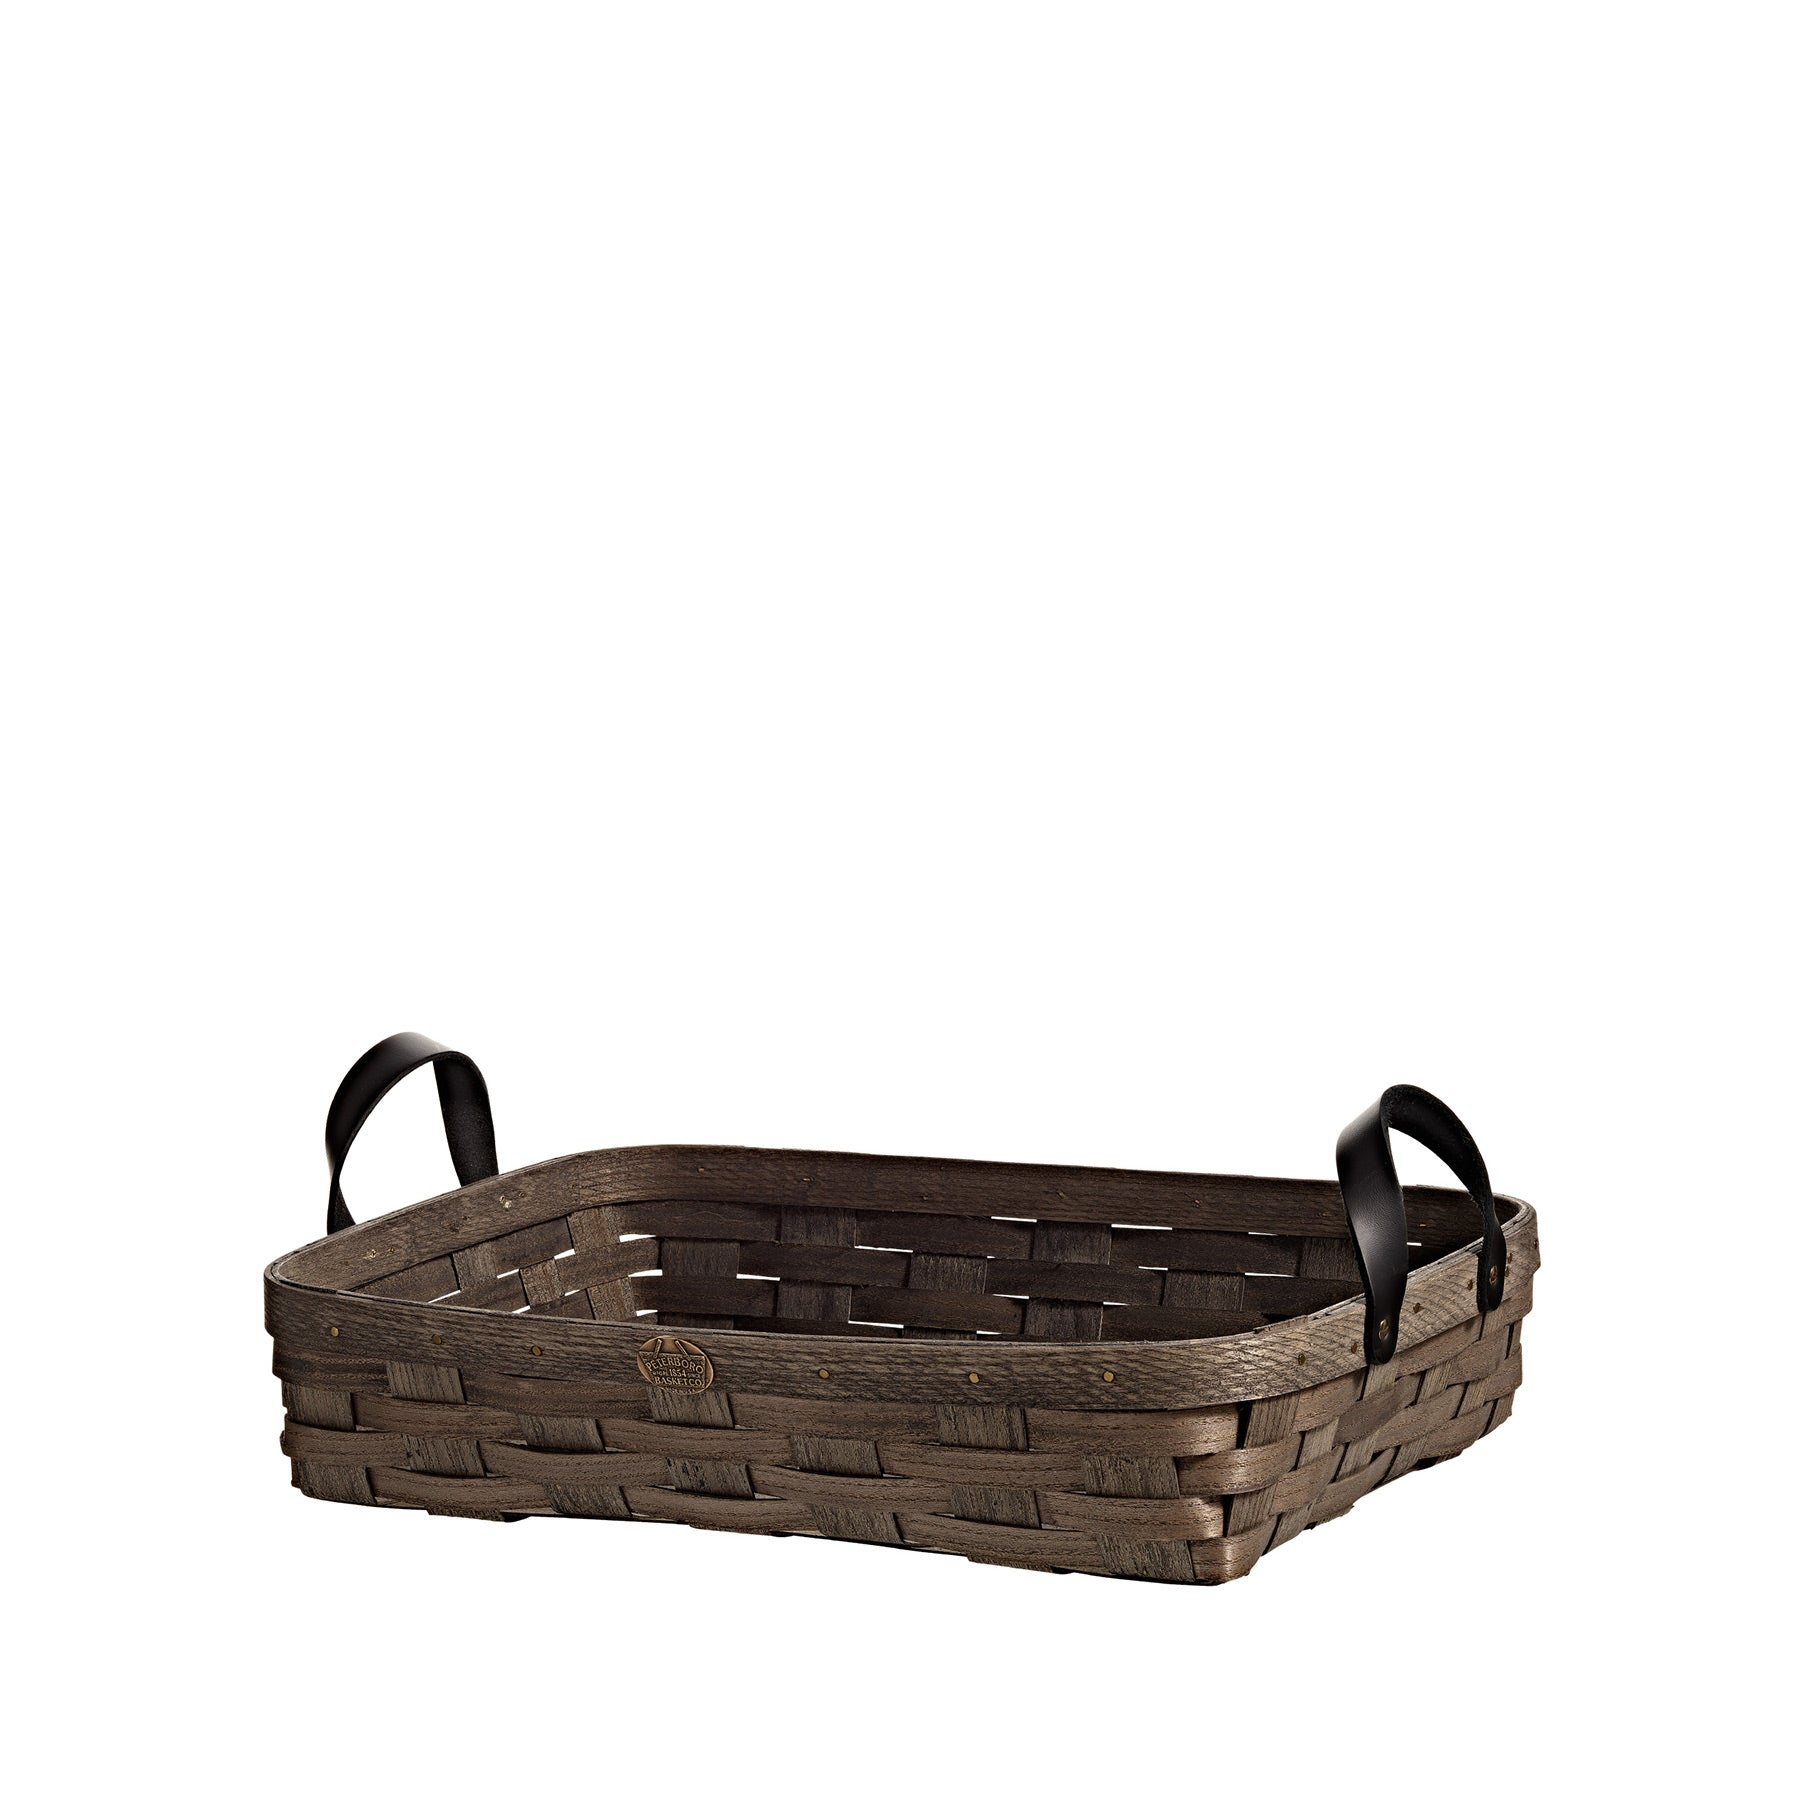 Serving Basket in Driftwood Grey Zoom Image 1